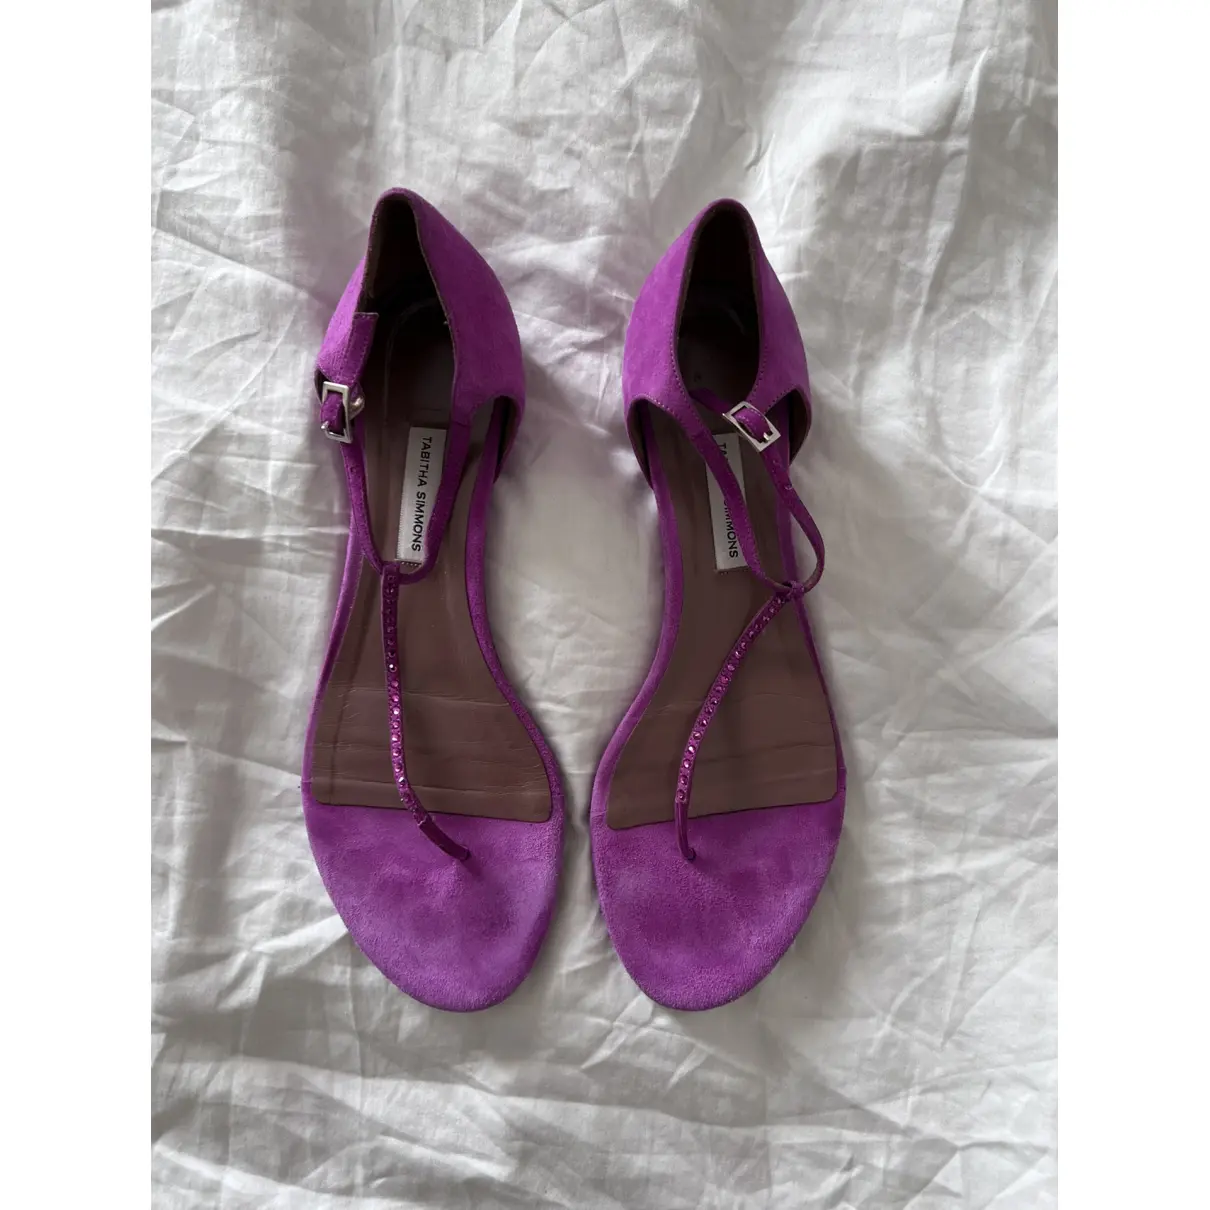 Buy Tabitha Simmons Sandals online